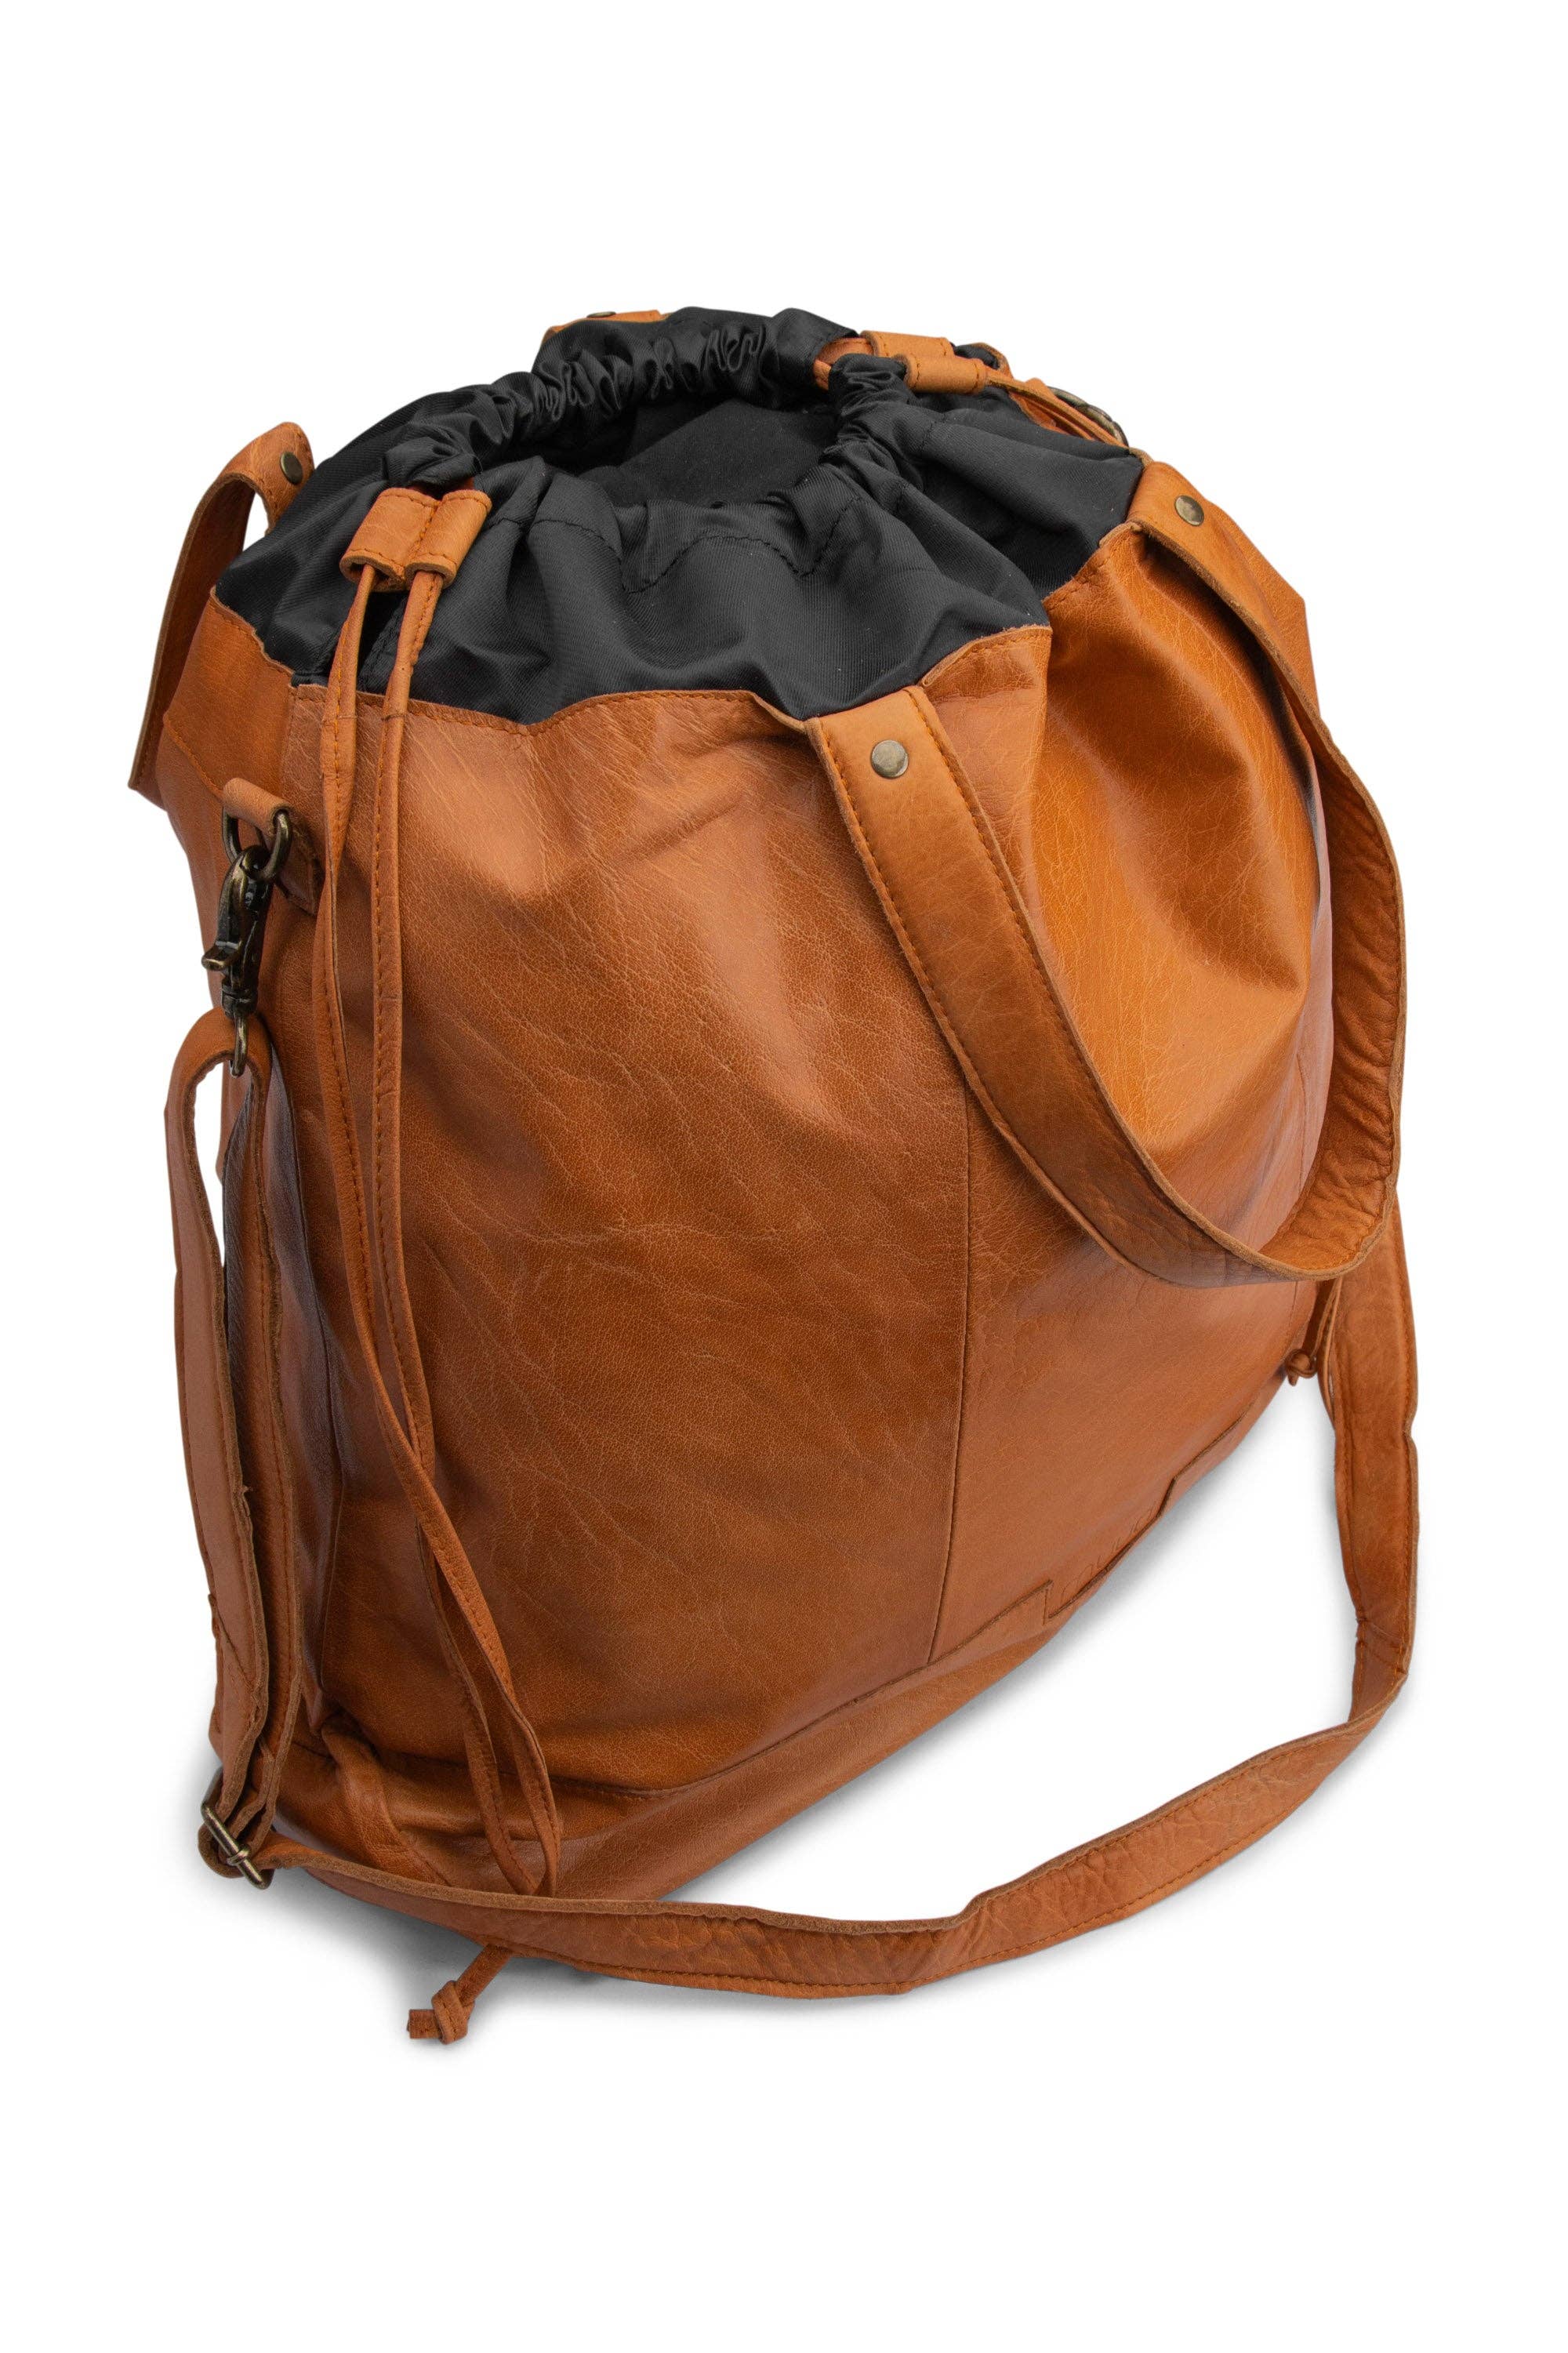 muud Lofoten XL - Extra Large Project Bag